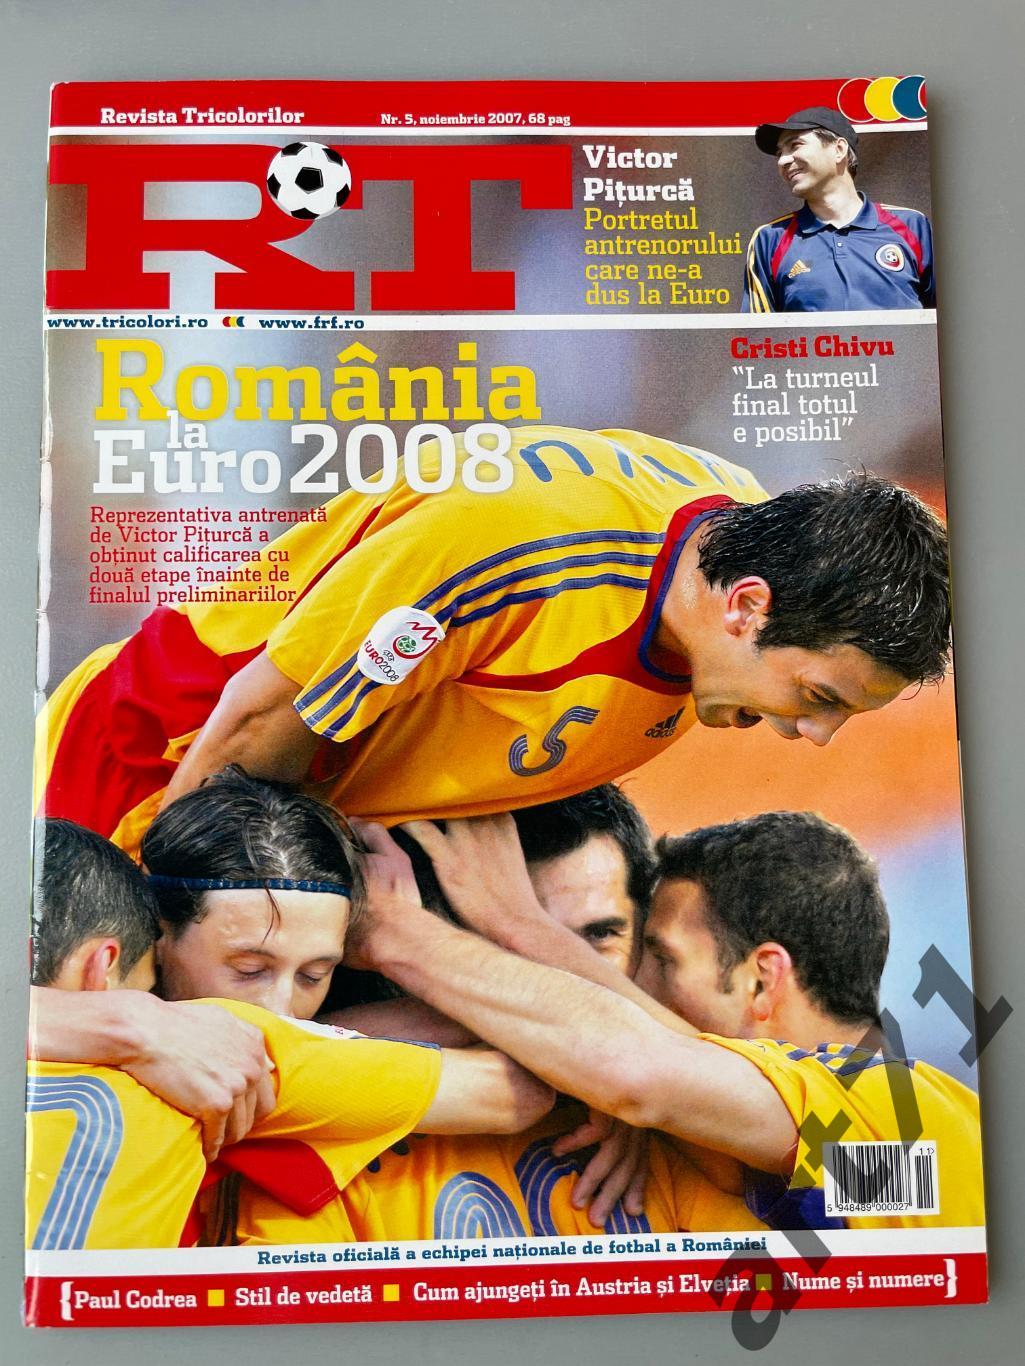 Romania la EURO 2008, на румын. яз. (RT, 2007)